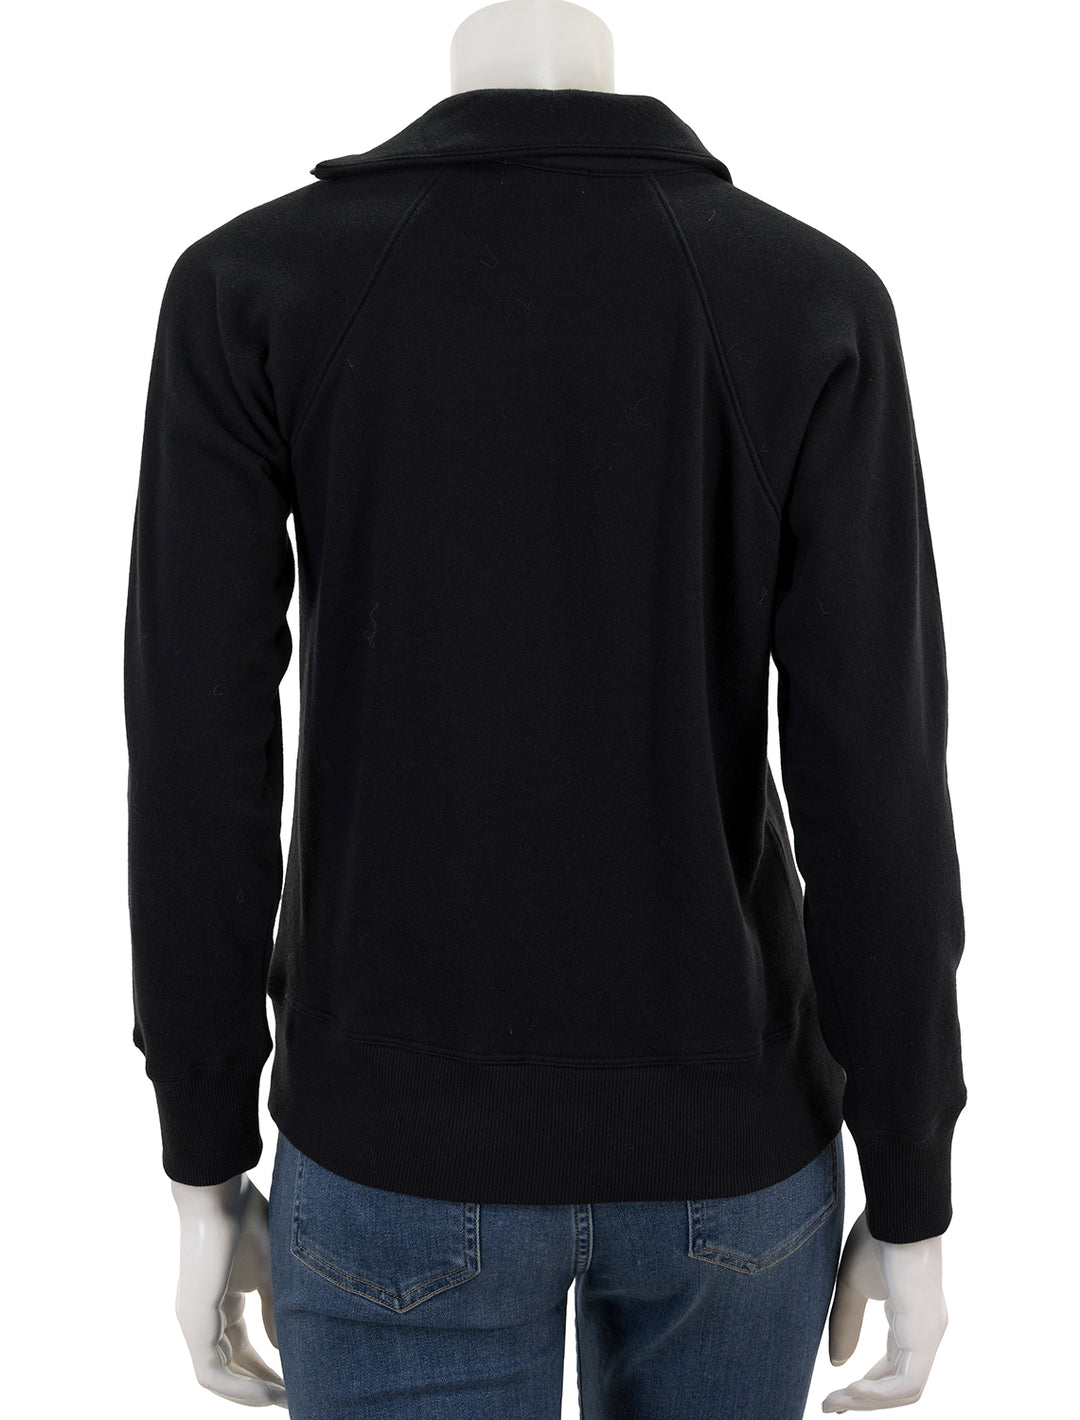 Back view of Goldie Lewinter's raglan zipneck sweatshirt in black.